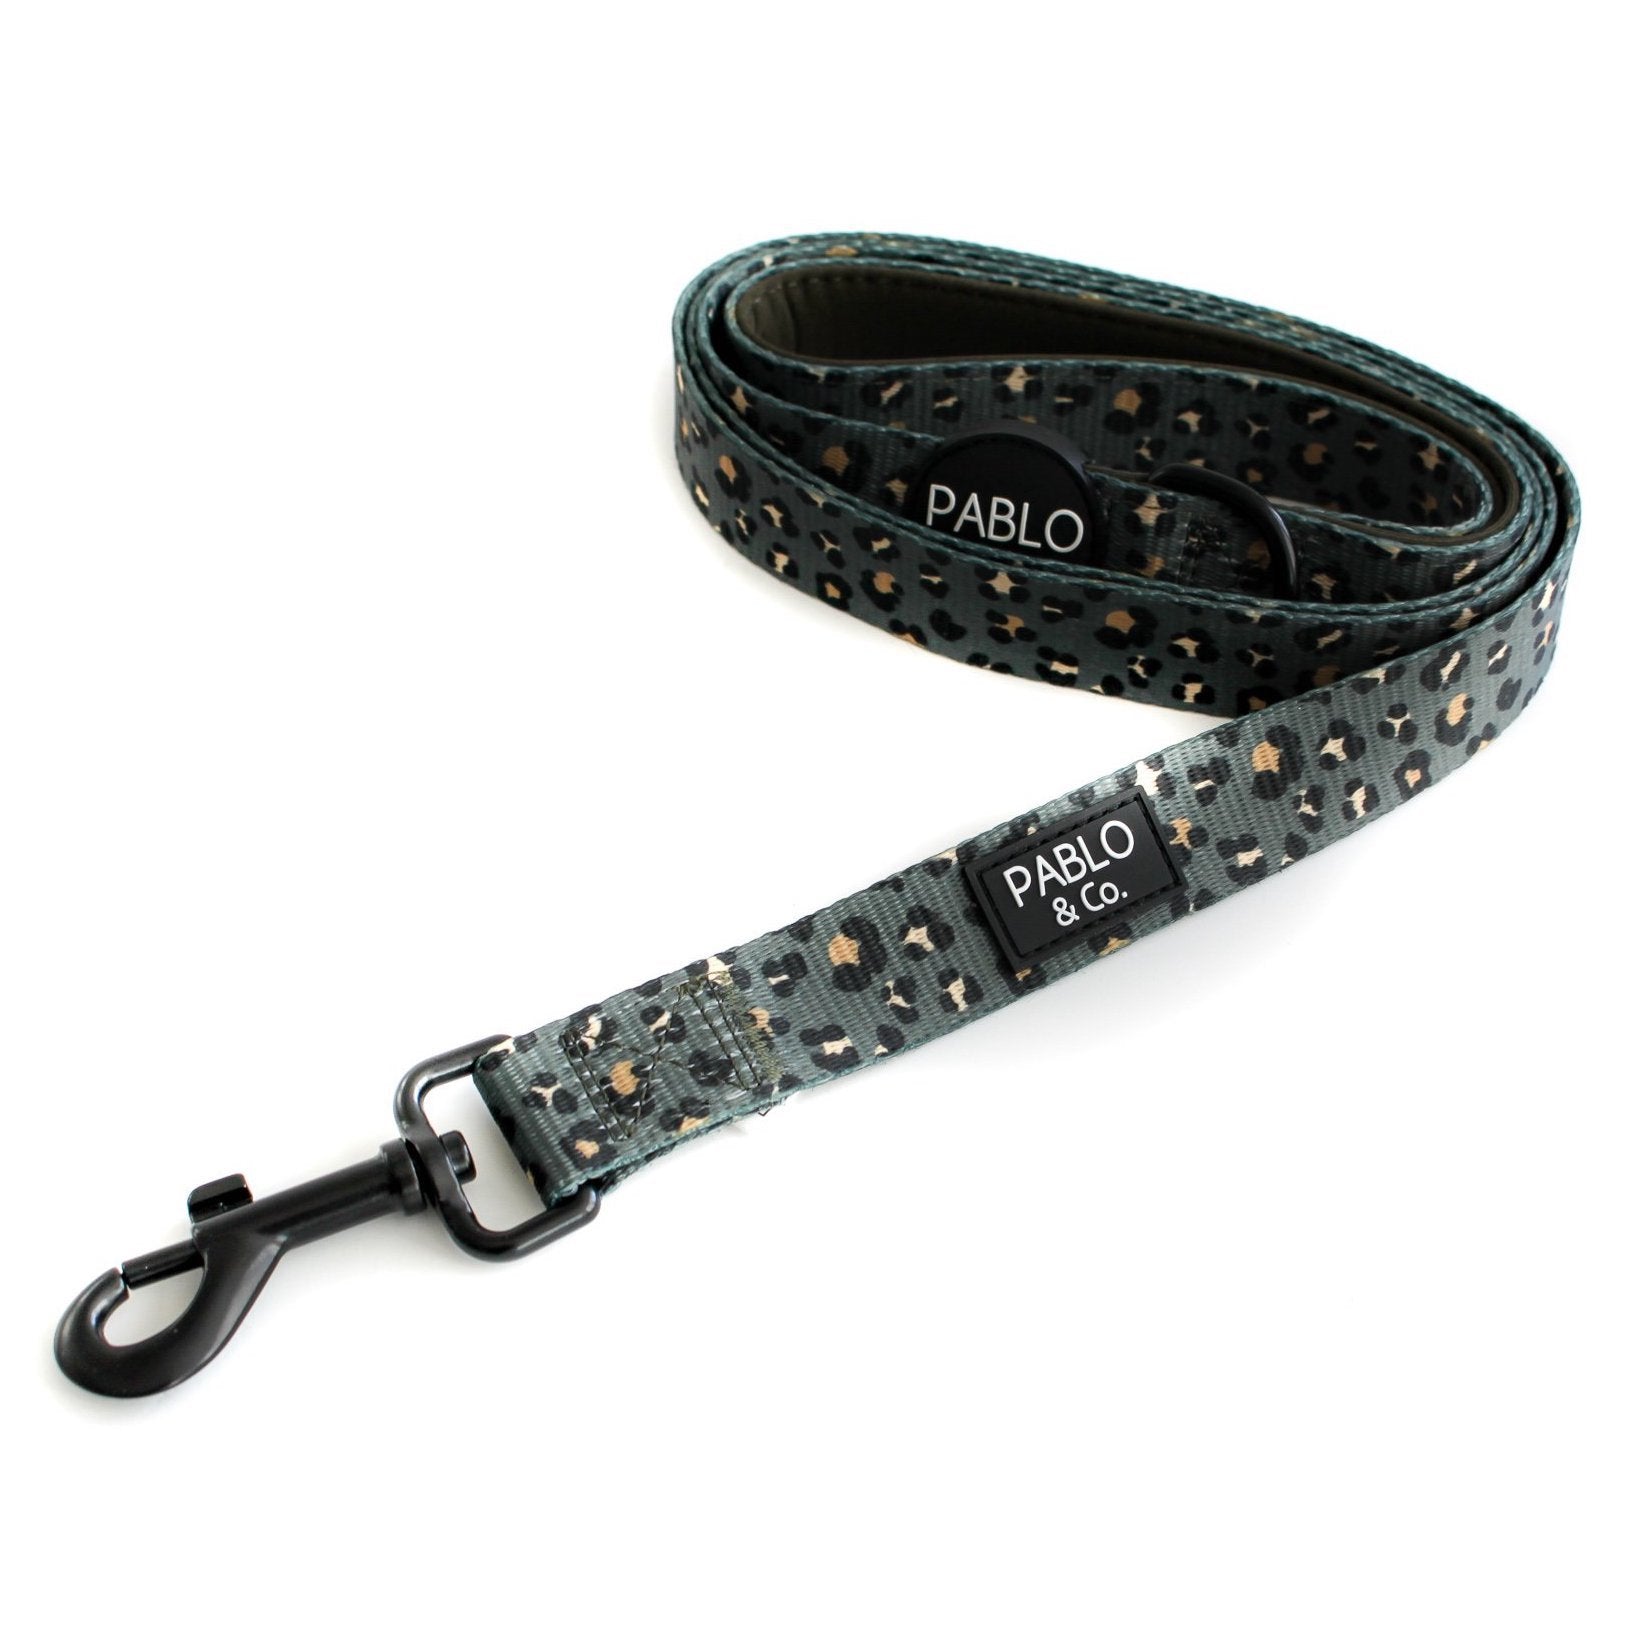 PABLO & CO - Khaki Leopard Dog Leash